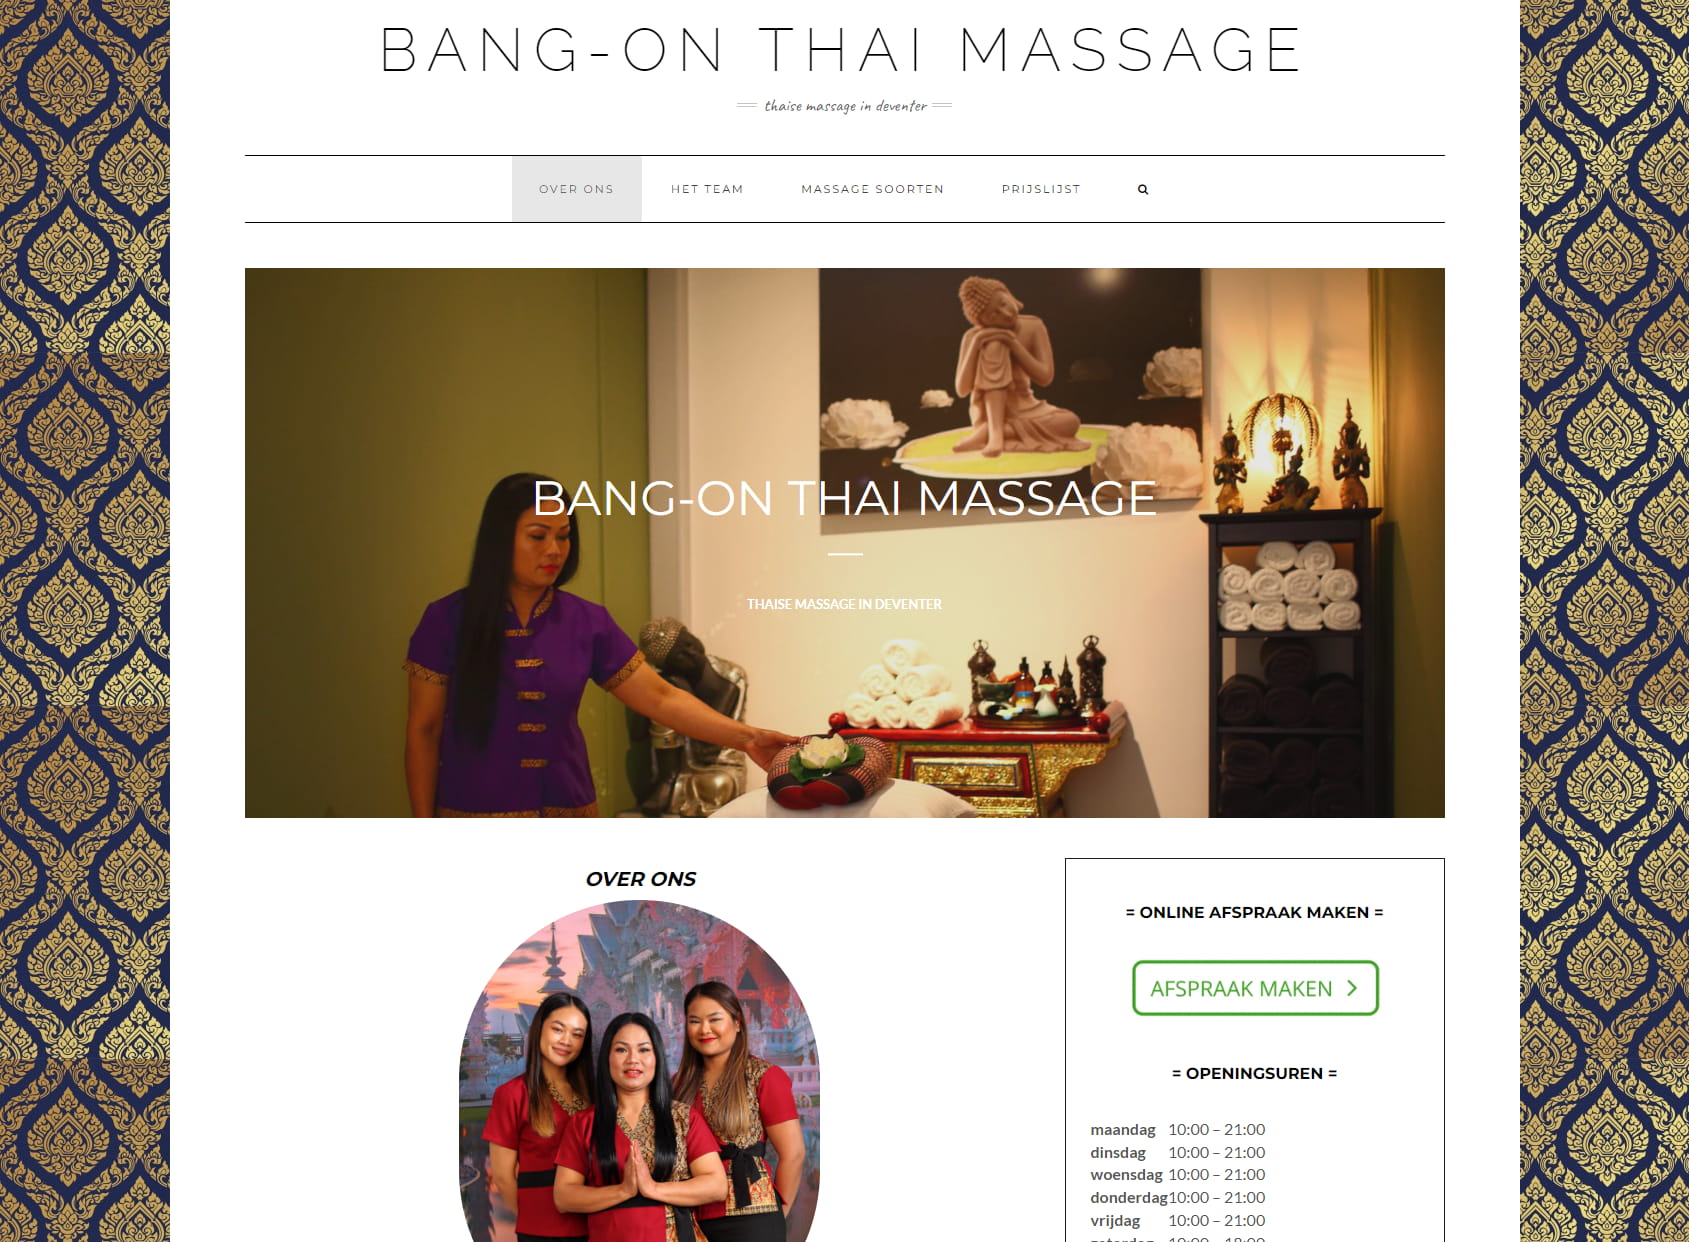 BangOn Thai Massage (BESLIST GÉÉN EROTIEK!)